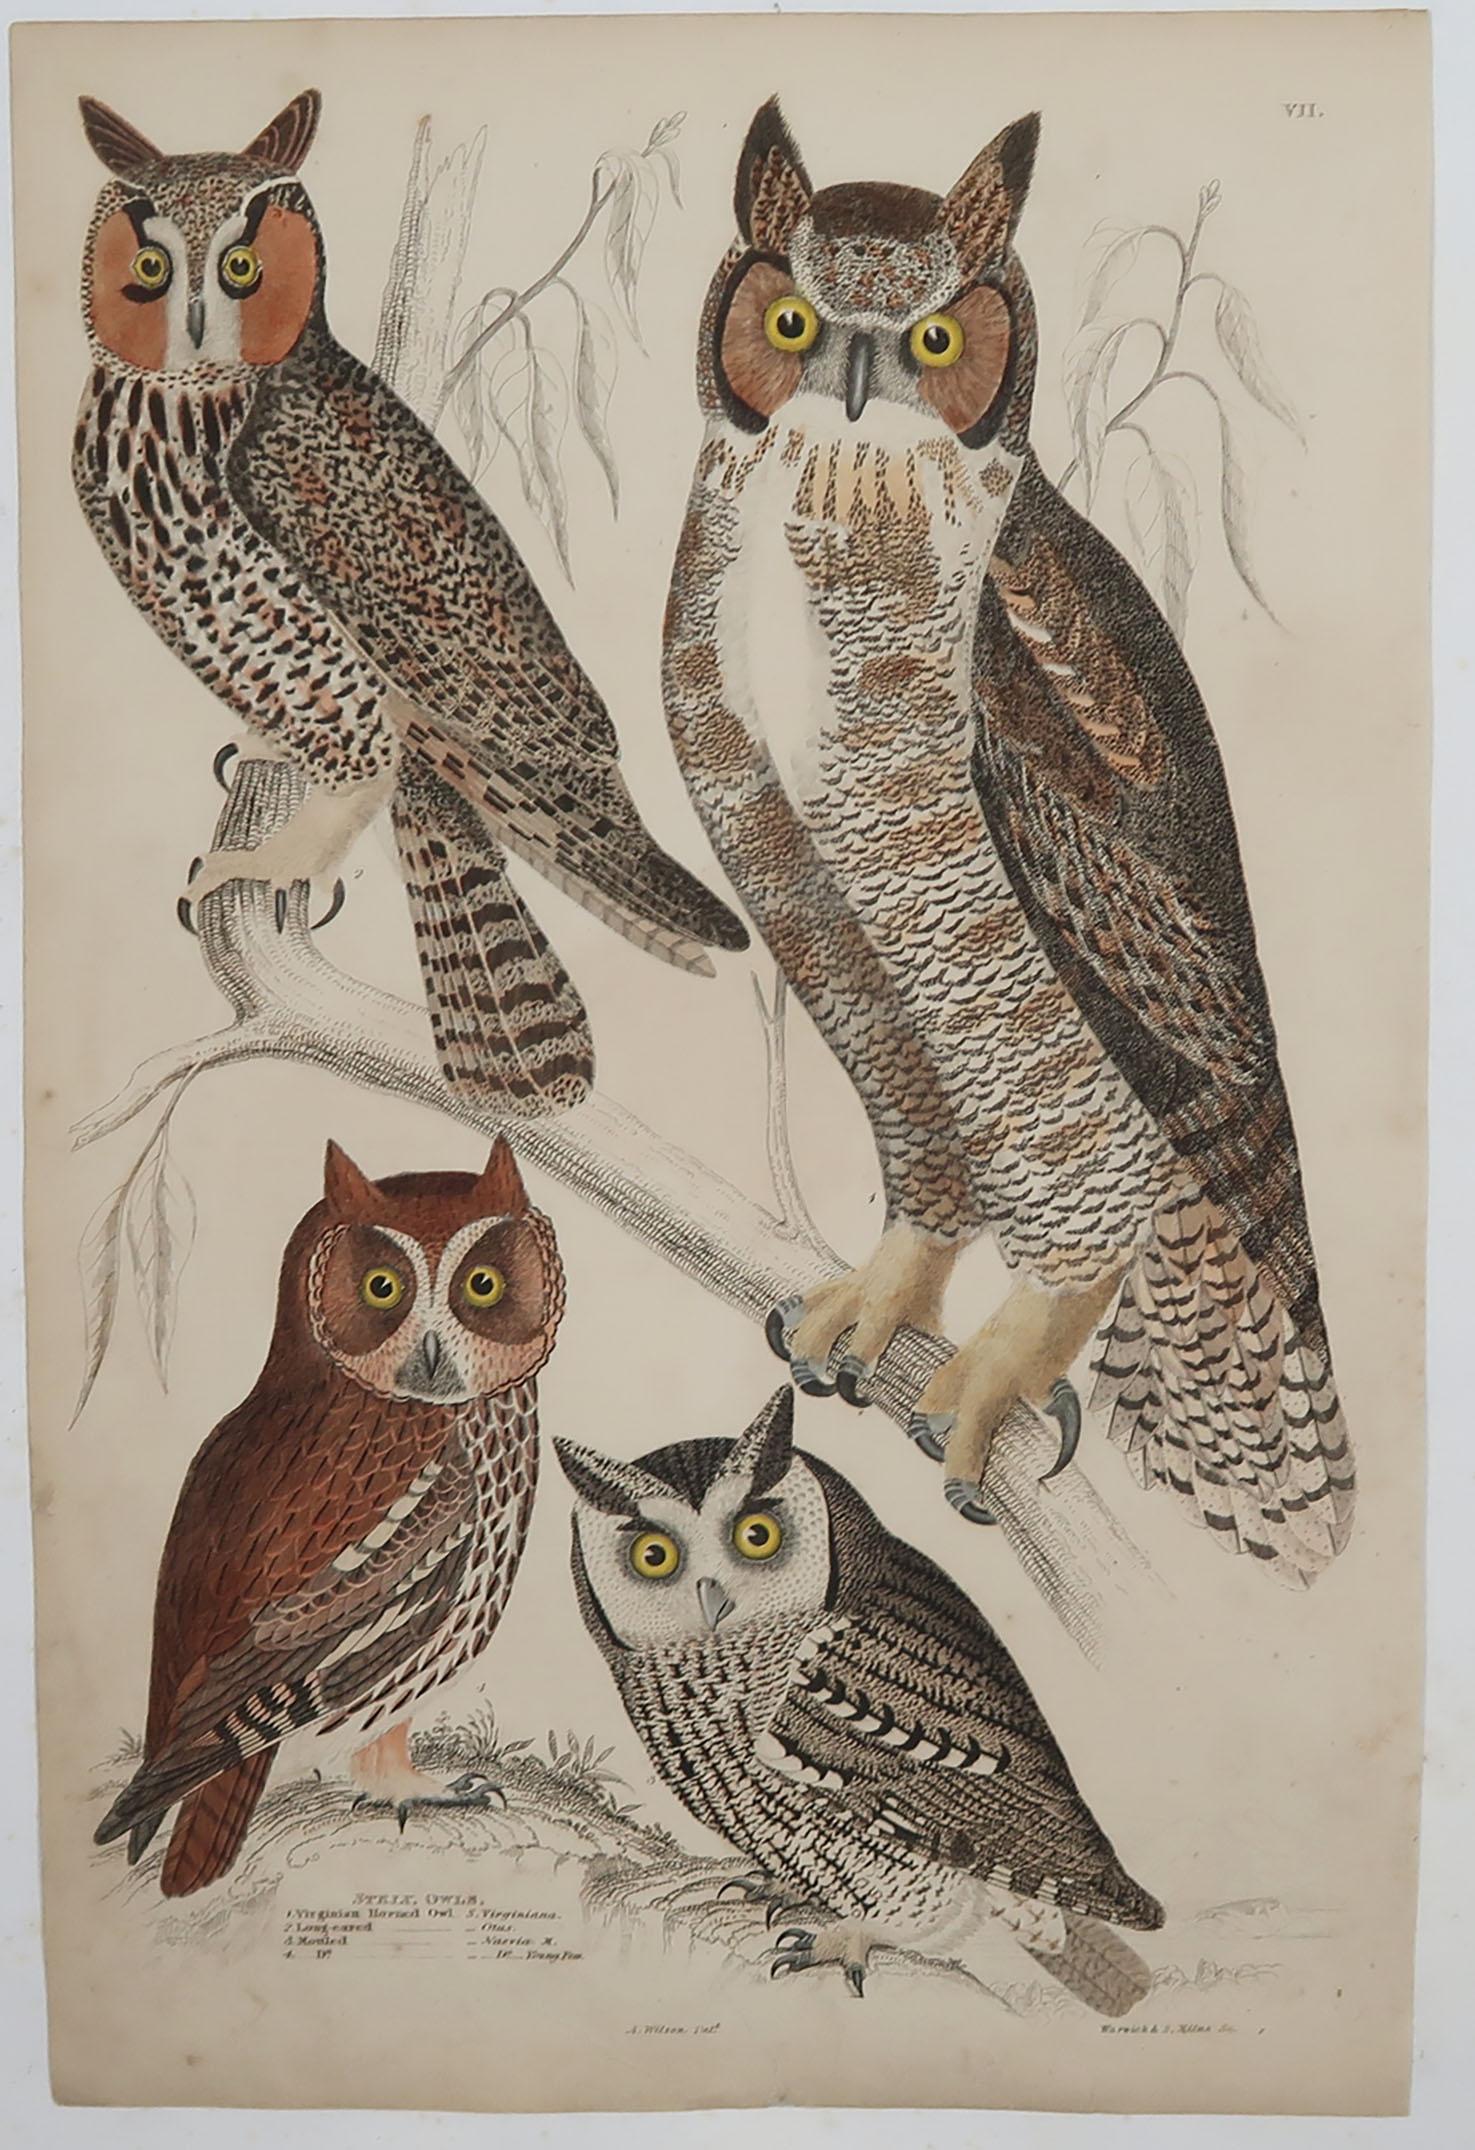 Scottish Set of 6 Original Antique Prints of Birds of Prey, 1830s